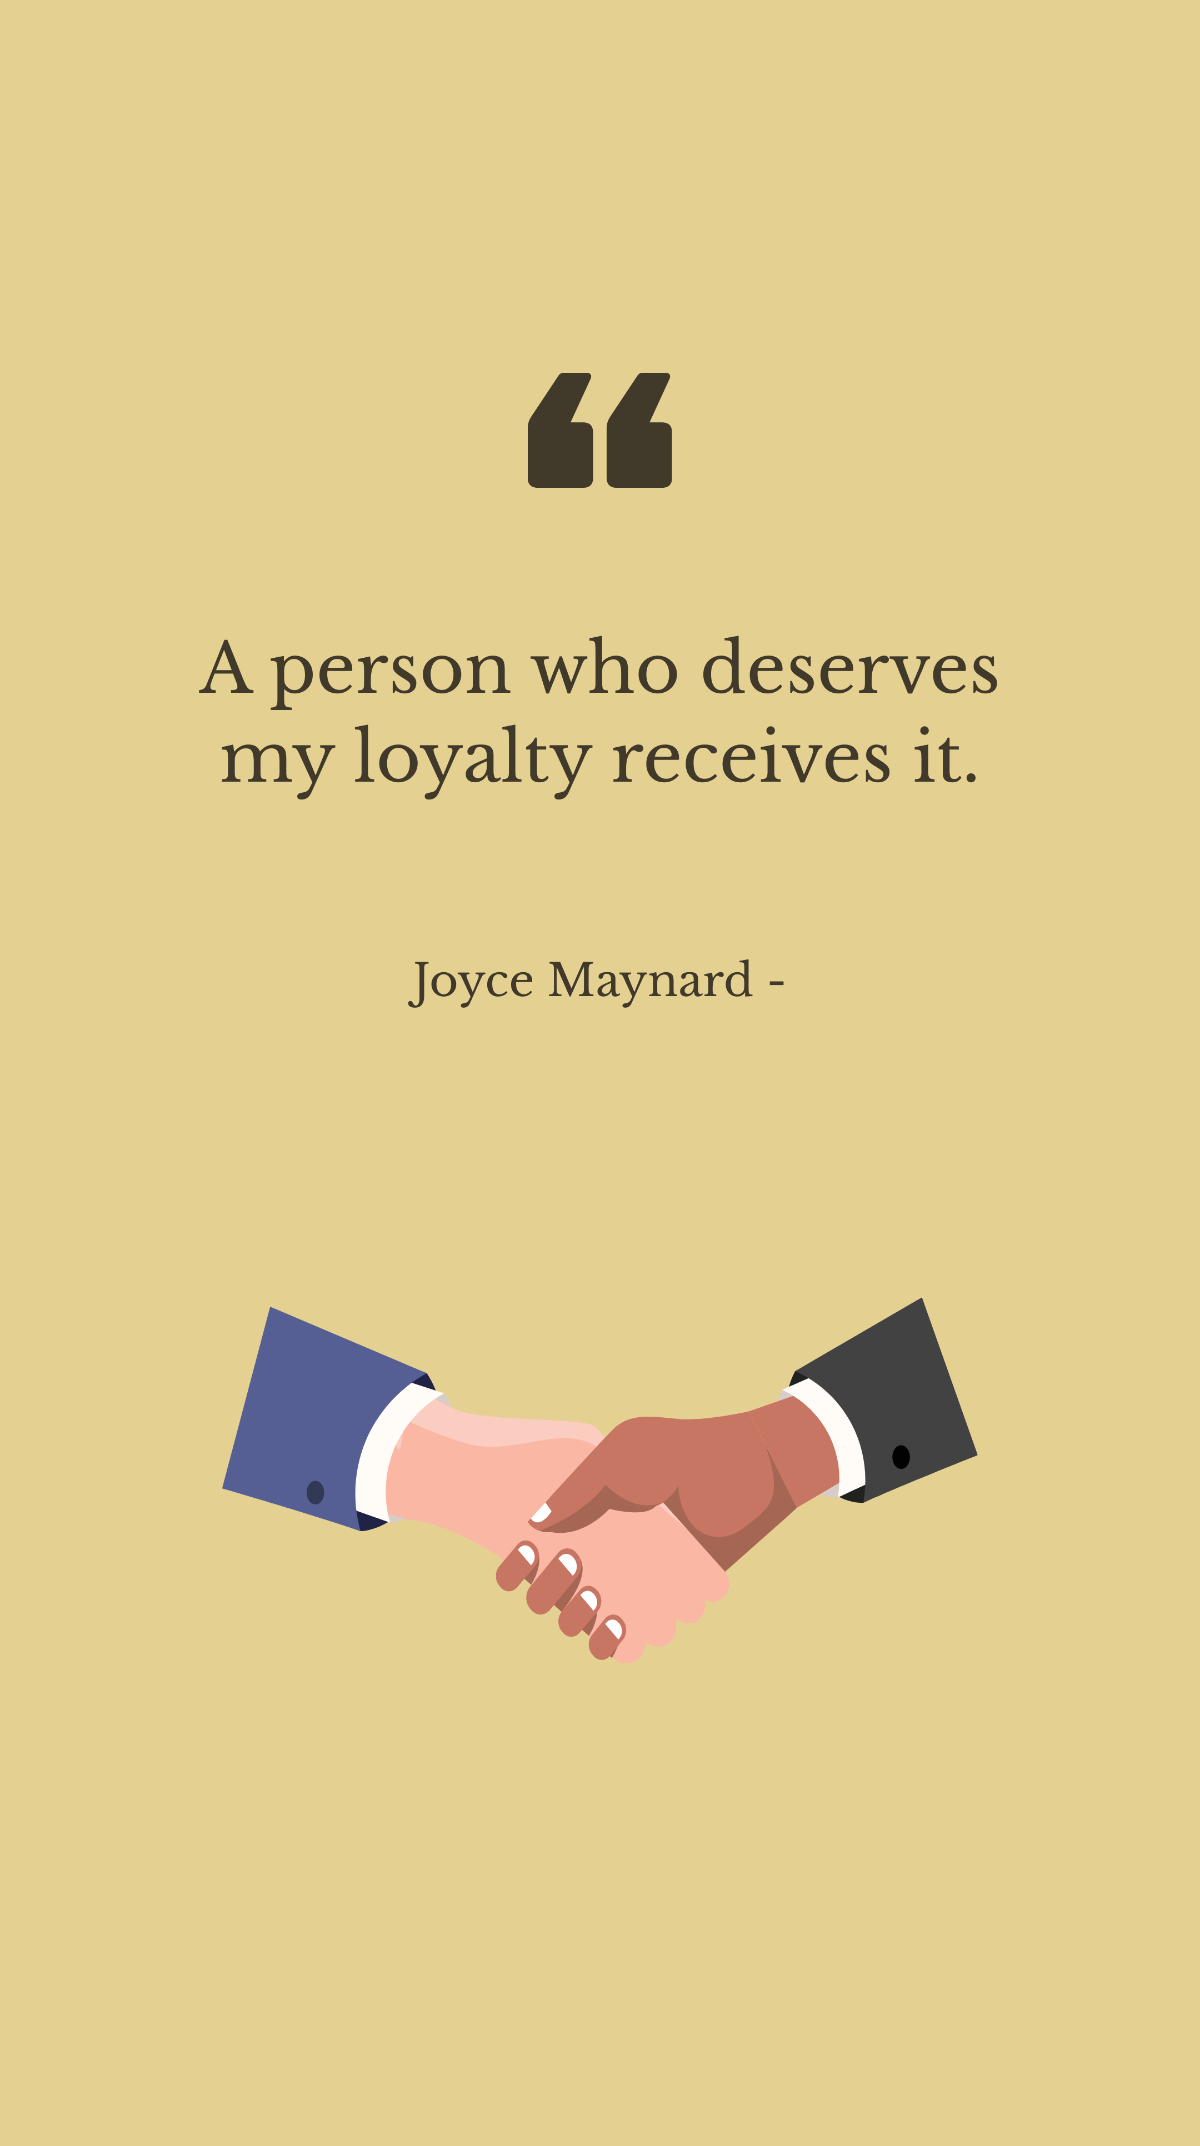 Joyce Maynard - A person who deserves my loyalty receives it. Template